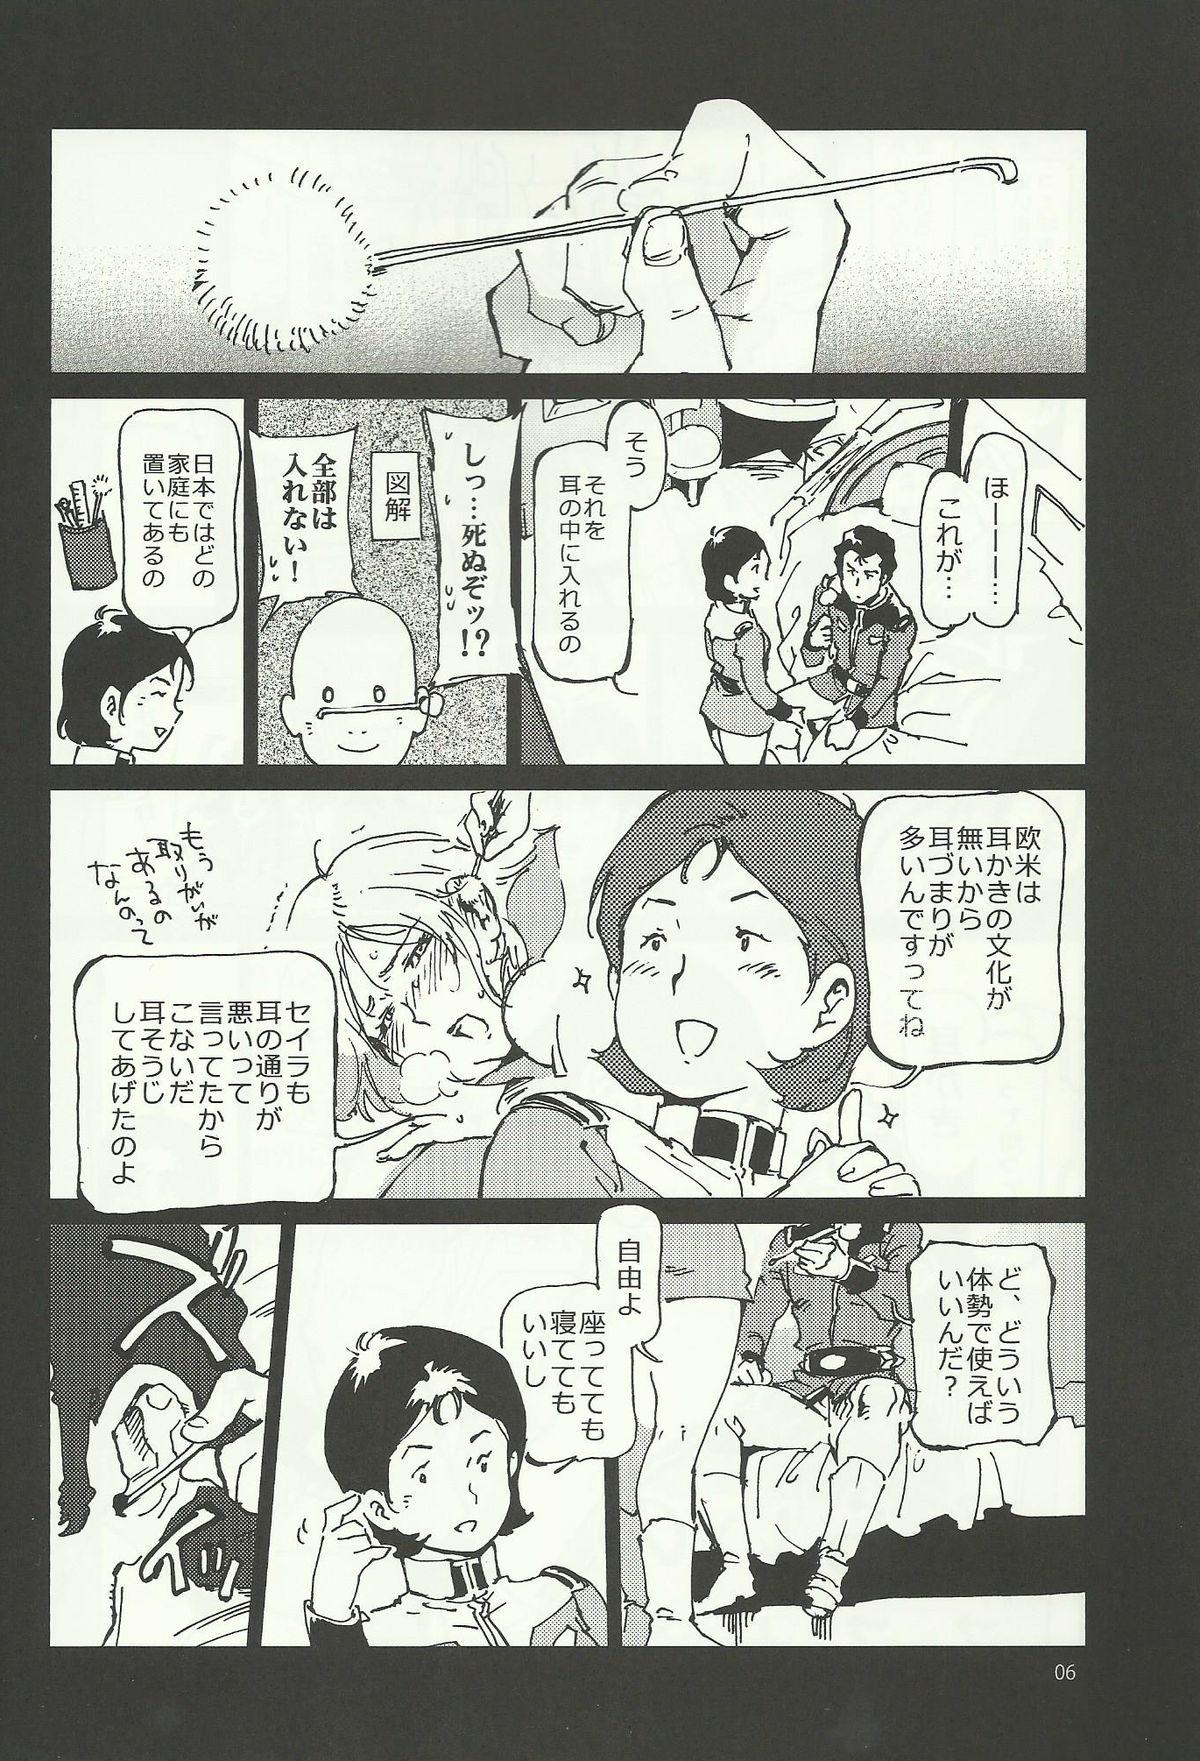 Casado Mirai no Mimikaki - Mobile suit gundam Parties - Page 5